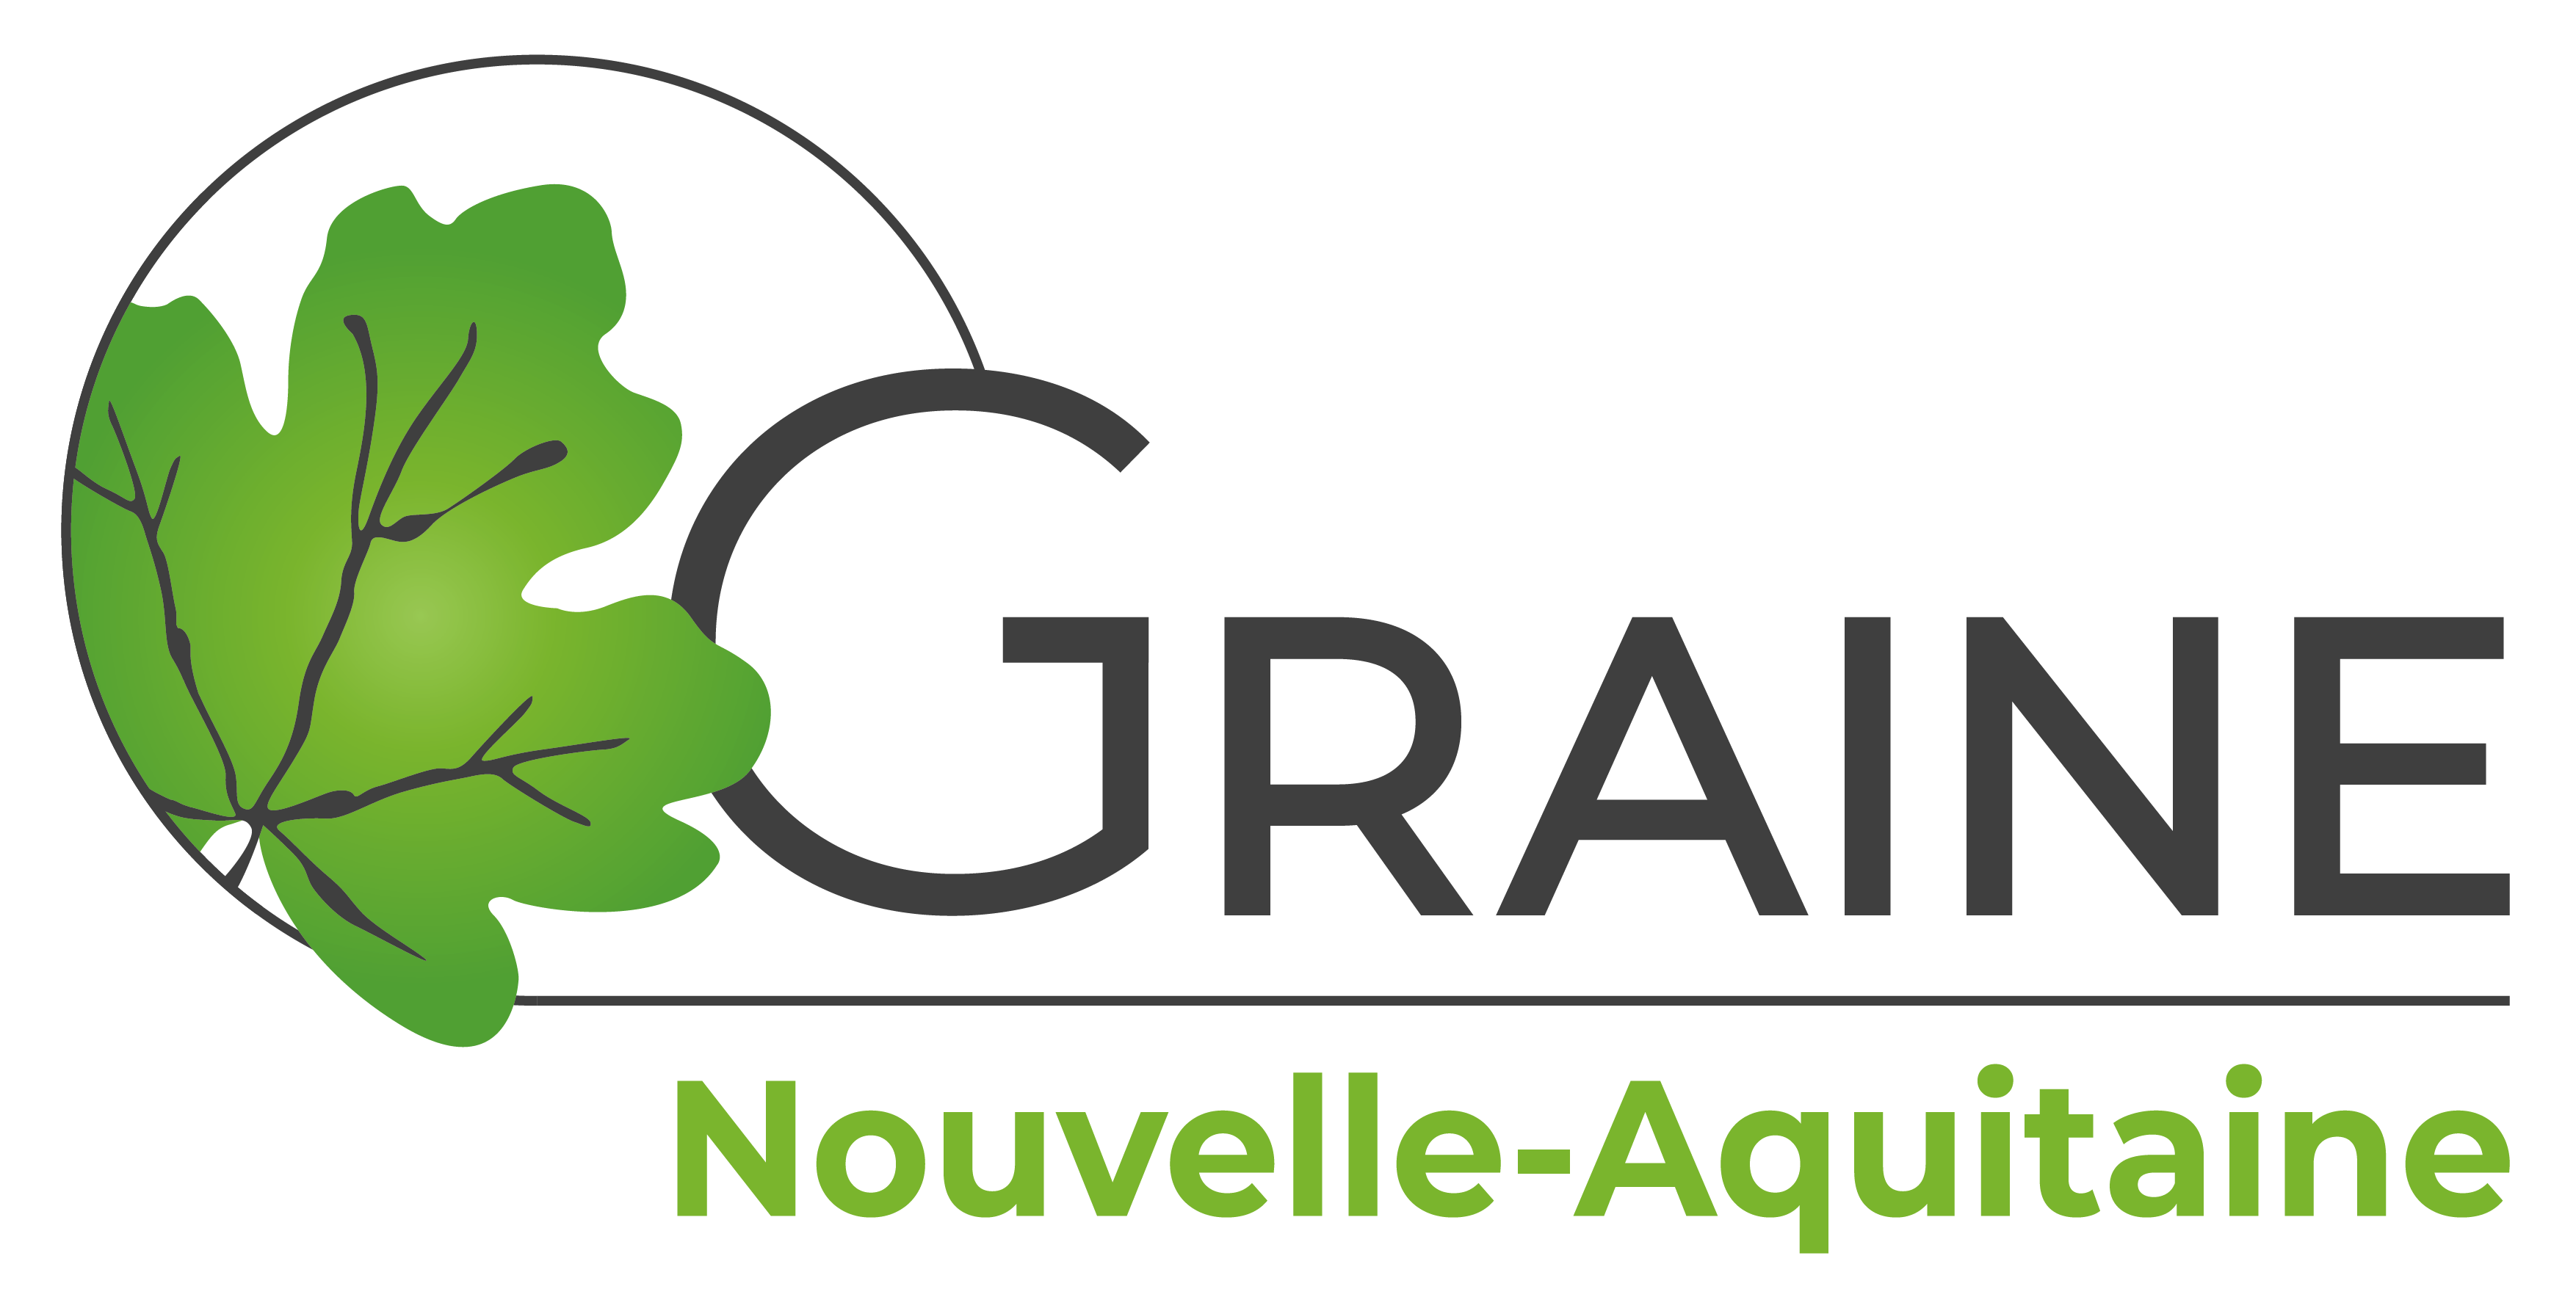 Accueil - GRAINE Nouvelle-Aquitaine